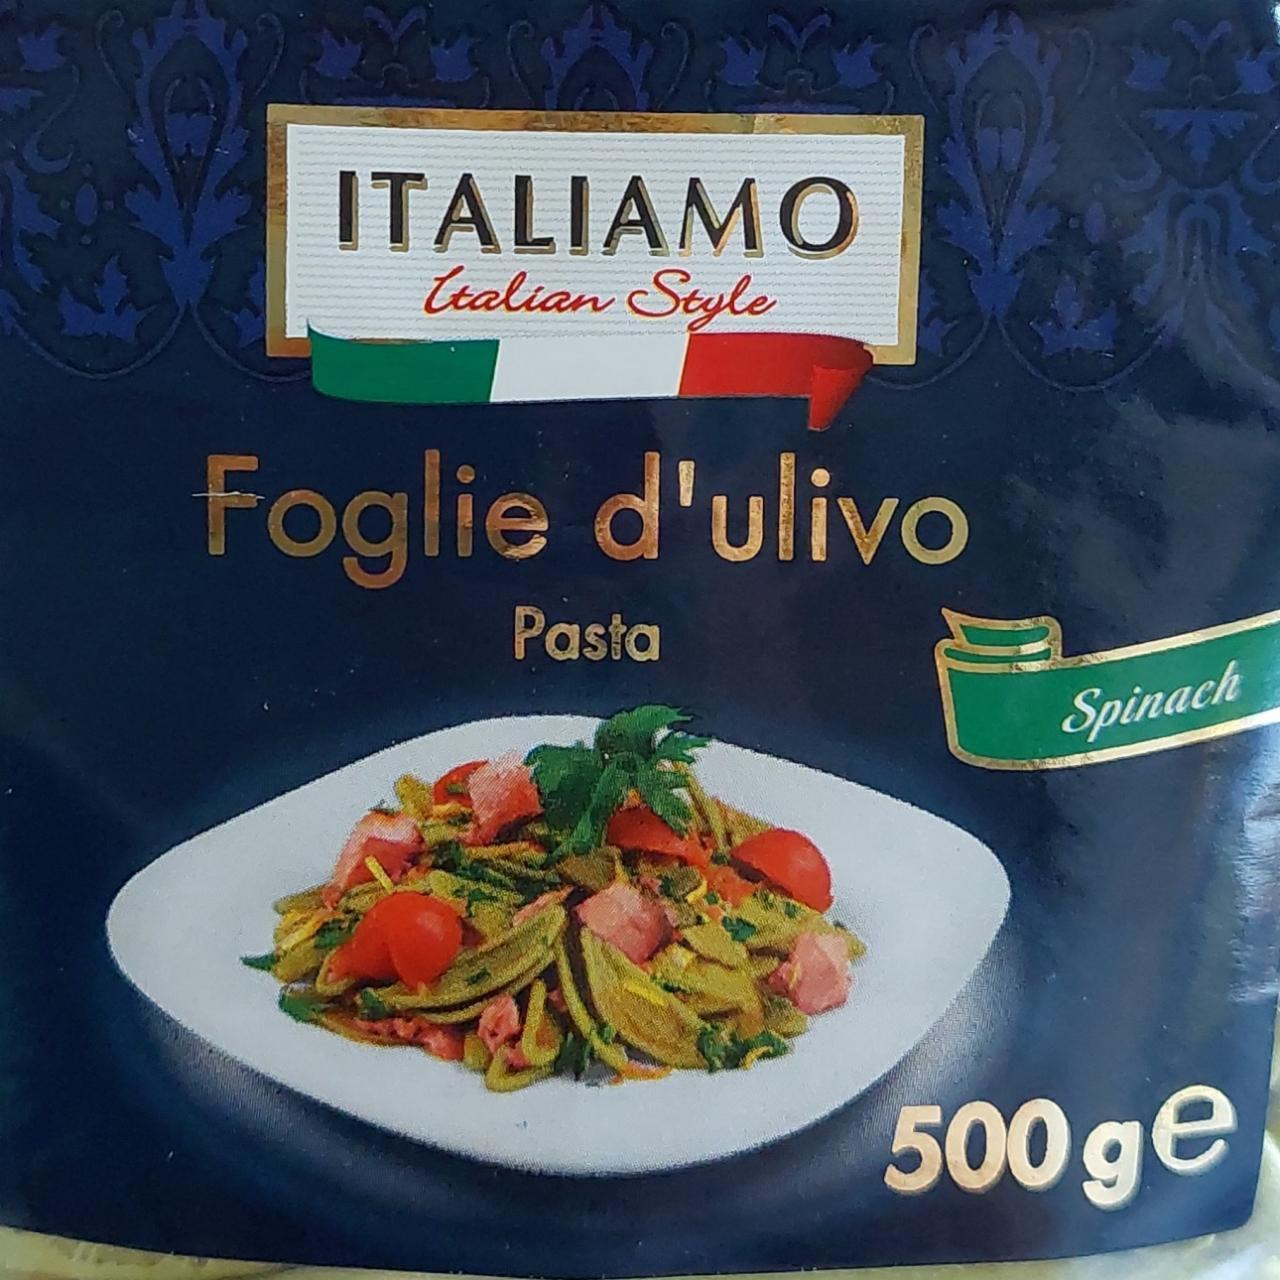 Képek - Foglie d'ulivo pasta spinach Italiamo